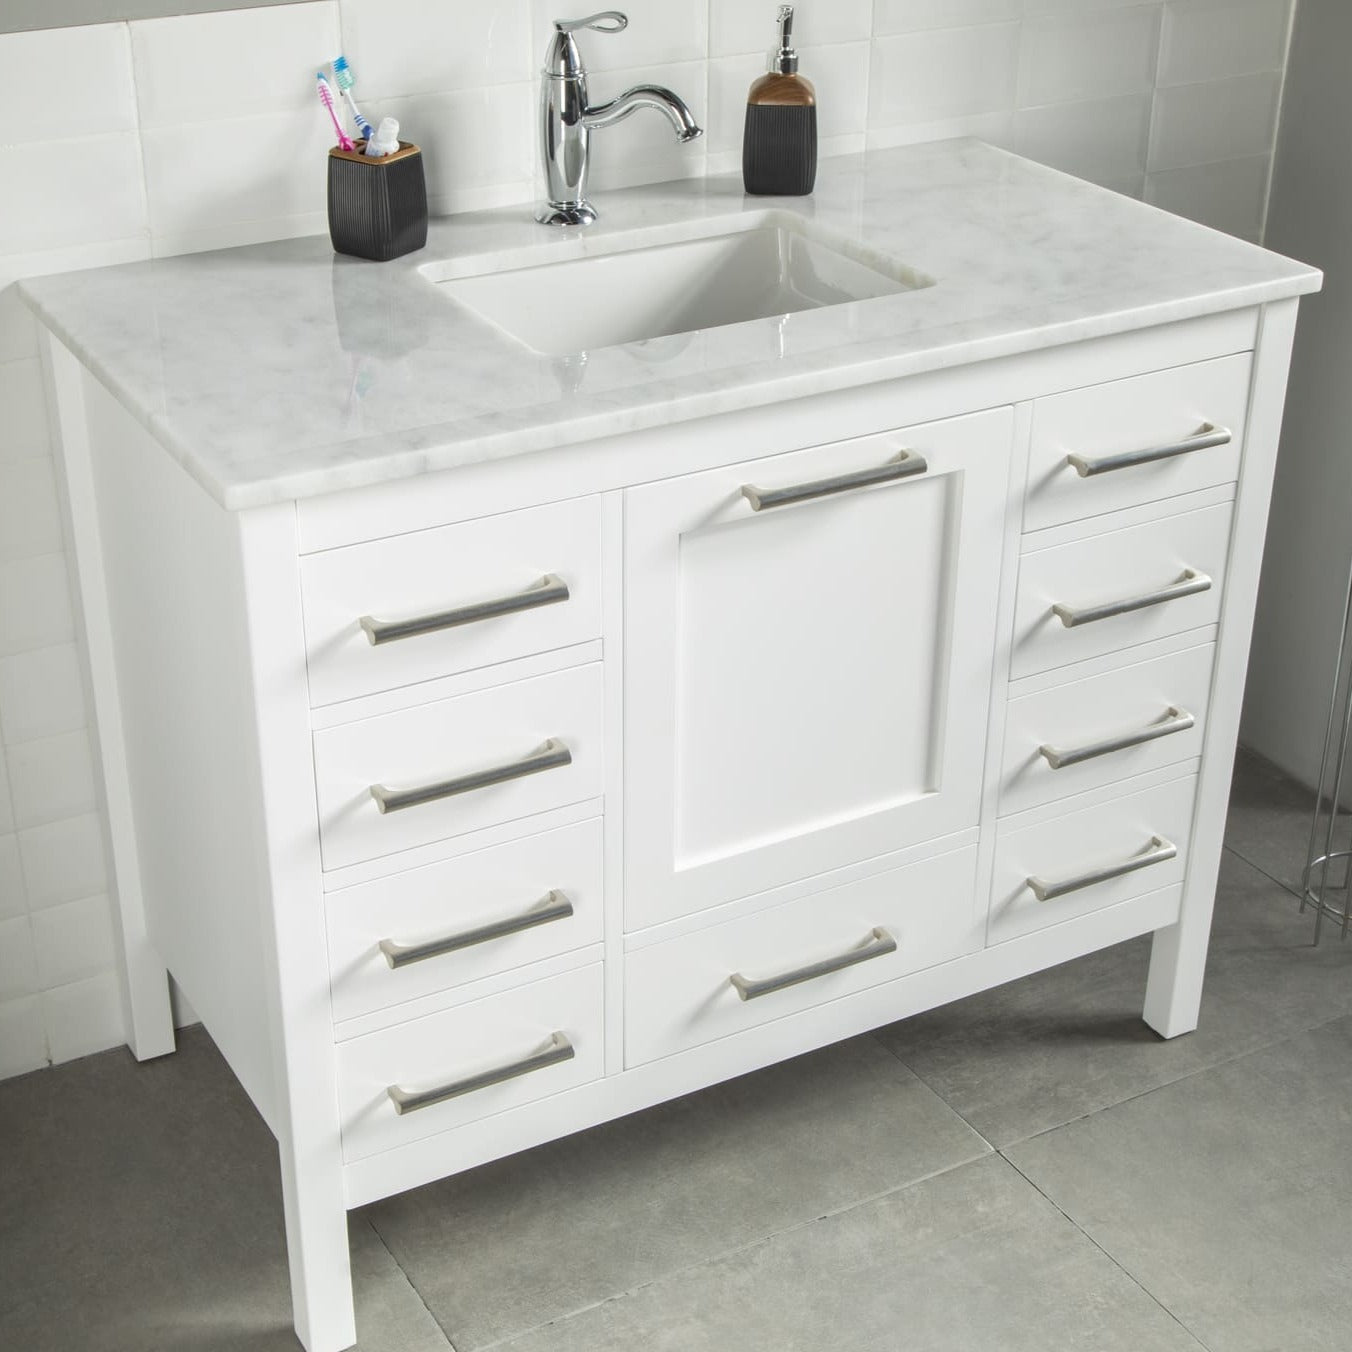 Ahley Bathroom Vanity Homelero 42"  #size_42"  #color_white  #hardware_brushed nickel